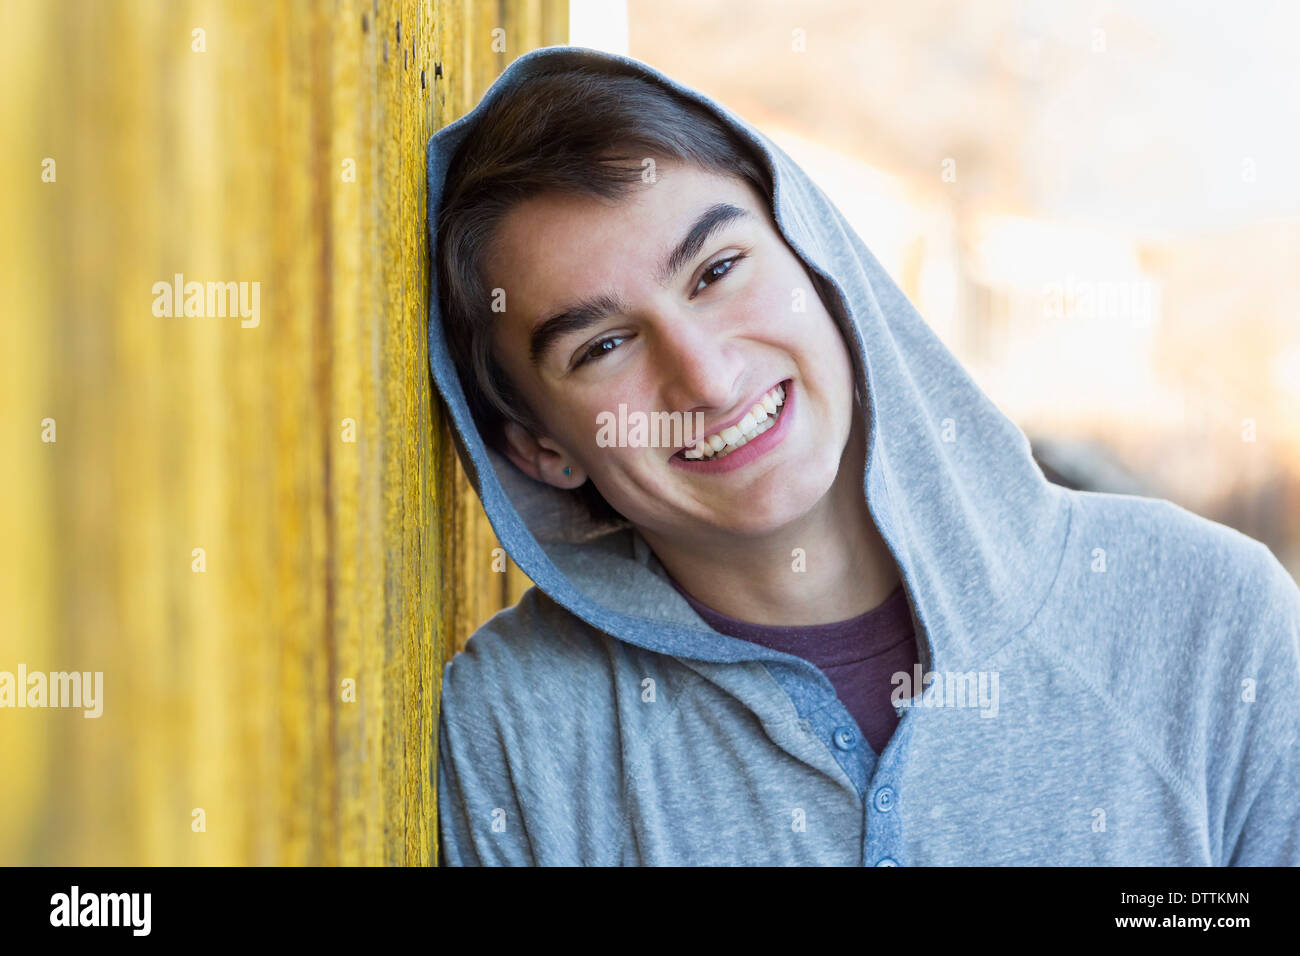 Mixed race teenage boy smiling Stock Photo